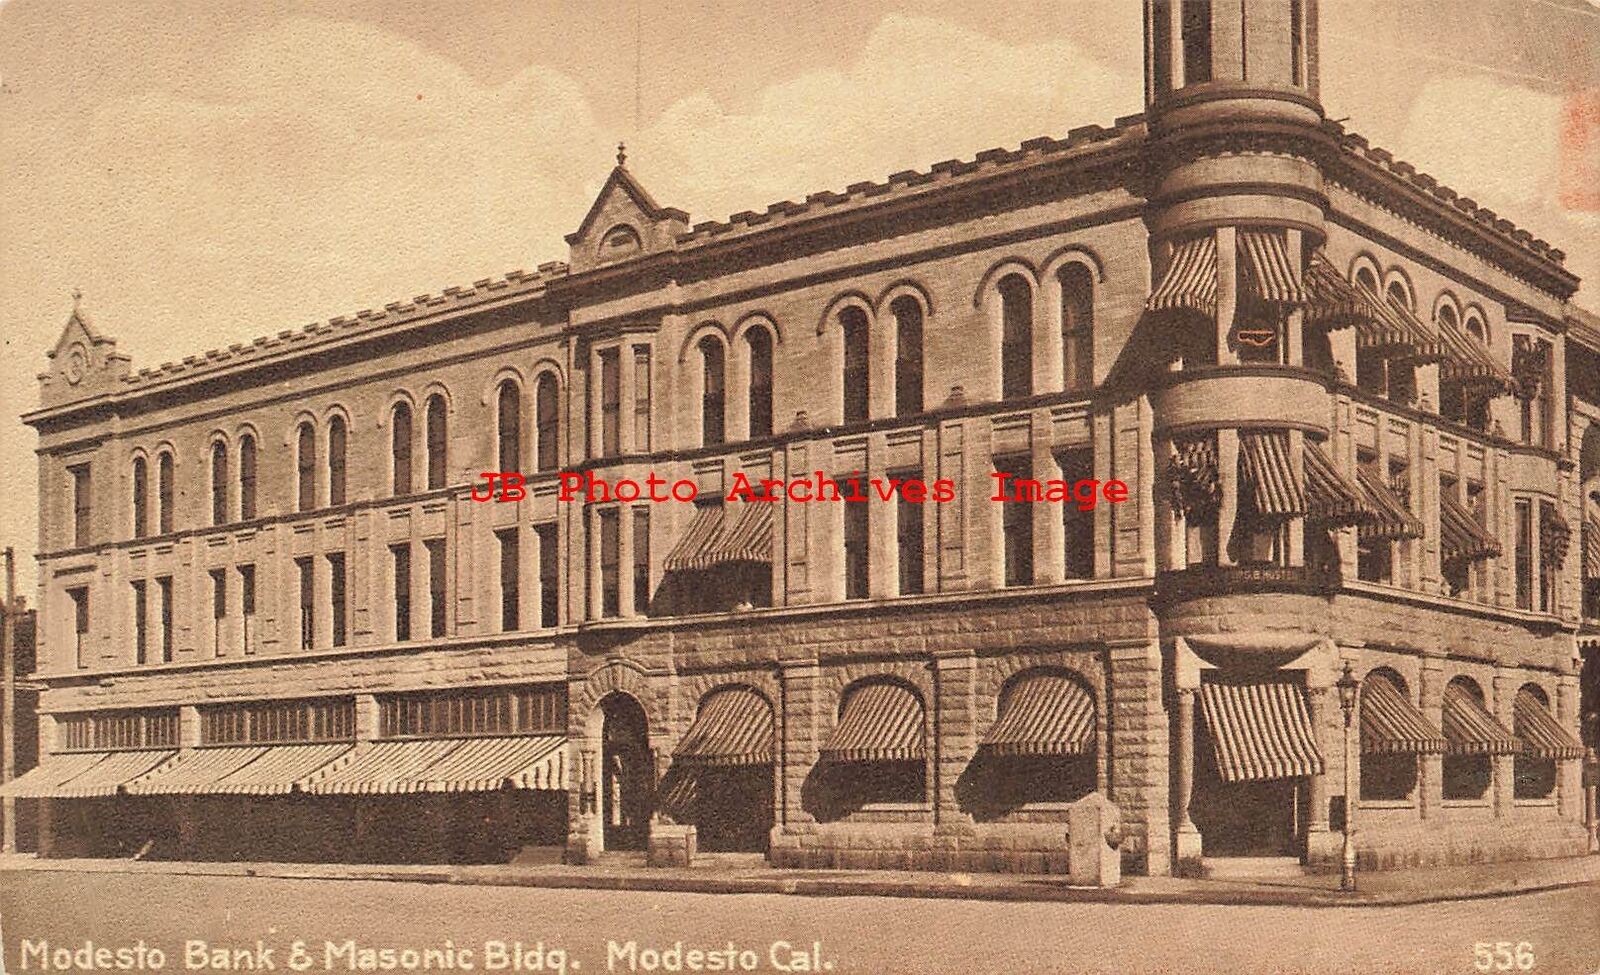 CA, Modesto, California, Modesto Bank, Masonic Building, California Sales Pub